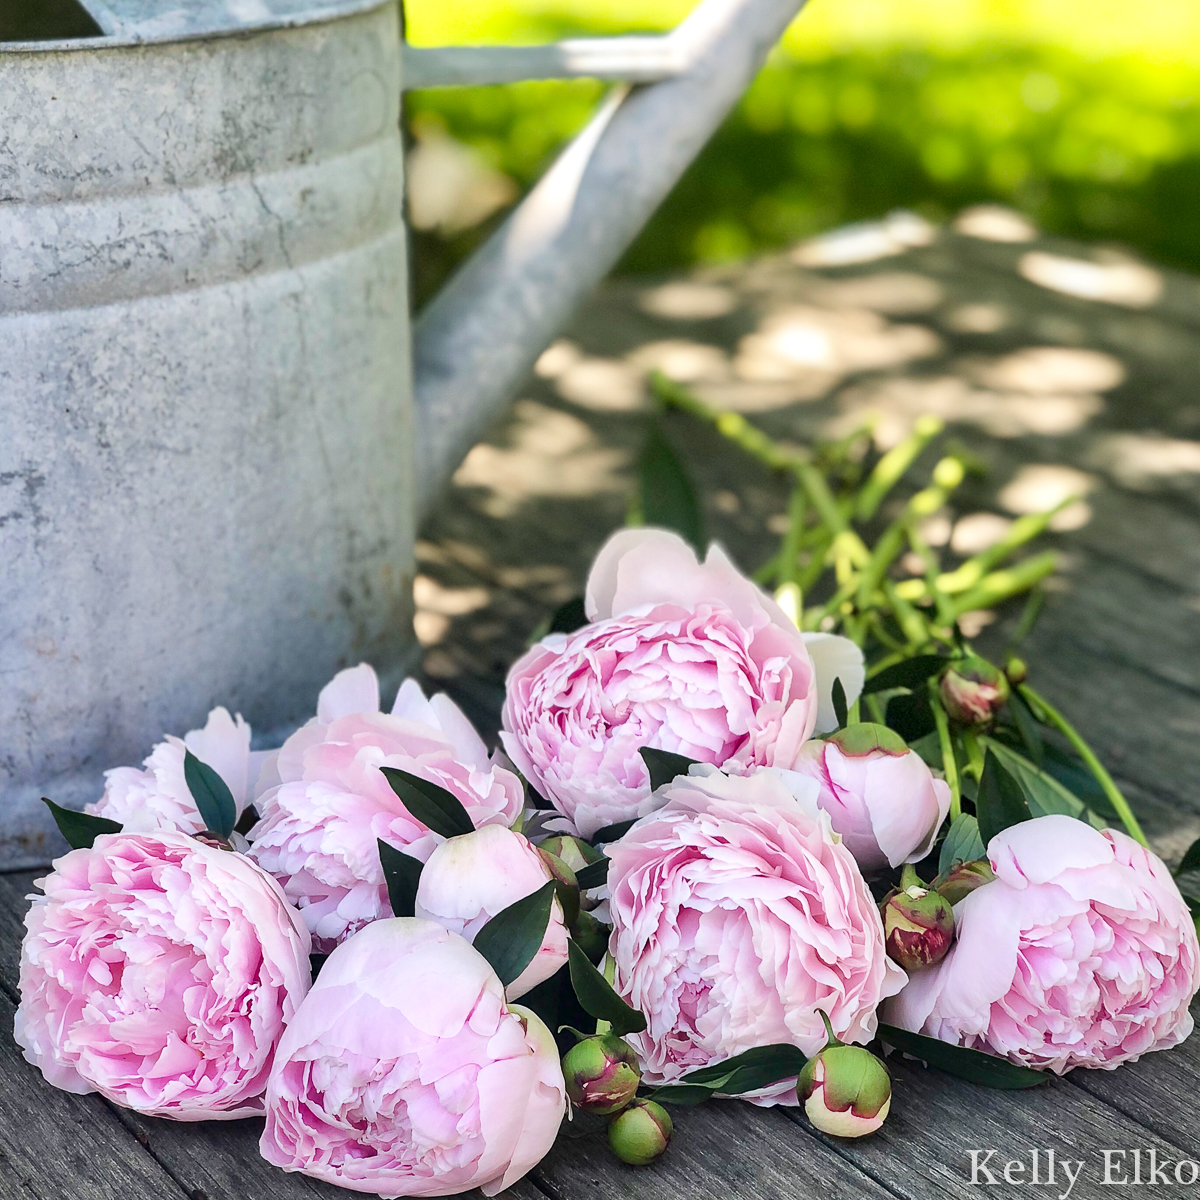 5 Tips for Growing Perfect Peonies kellyelko.com #peonies #peony #gardening #gardeningtips #gardens #gardeners #perennials #pinkflowers #farmhousedecor